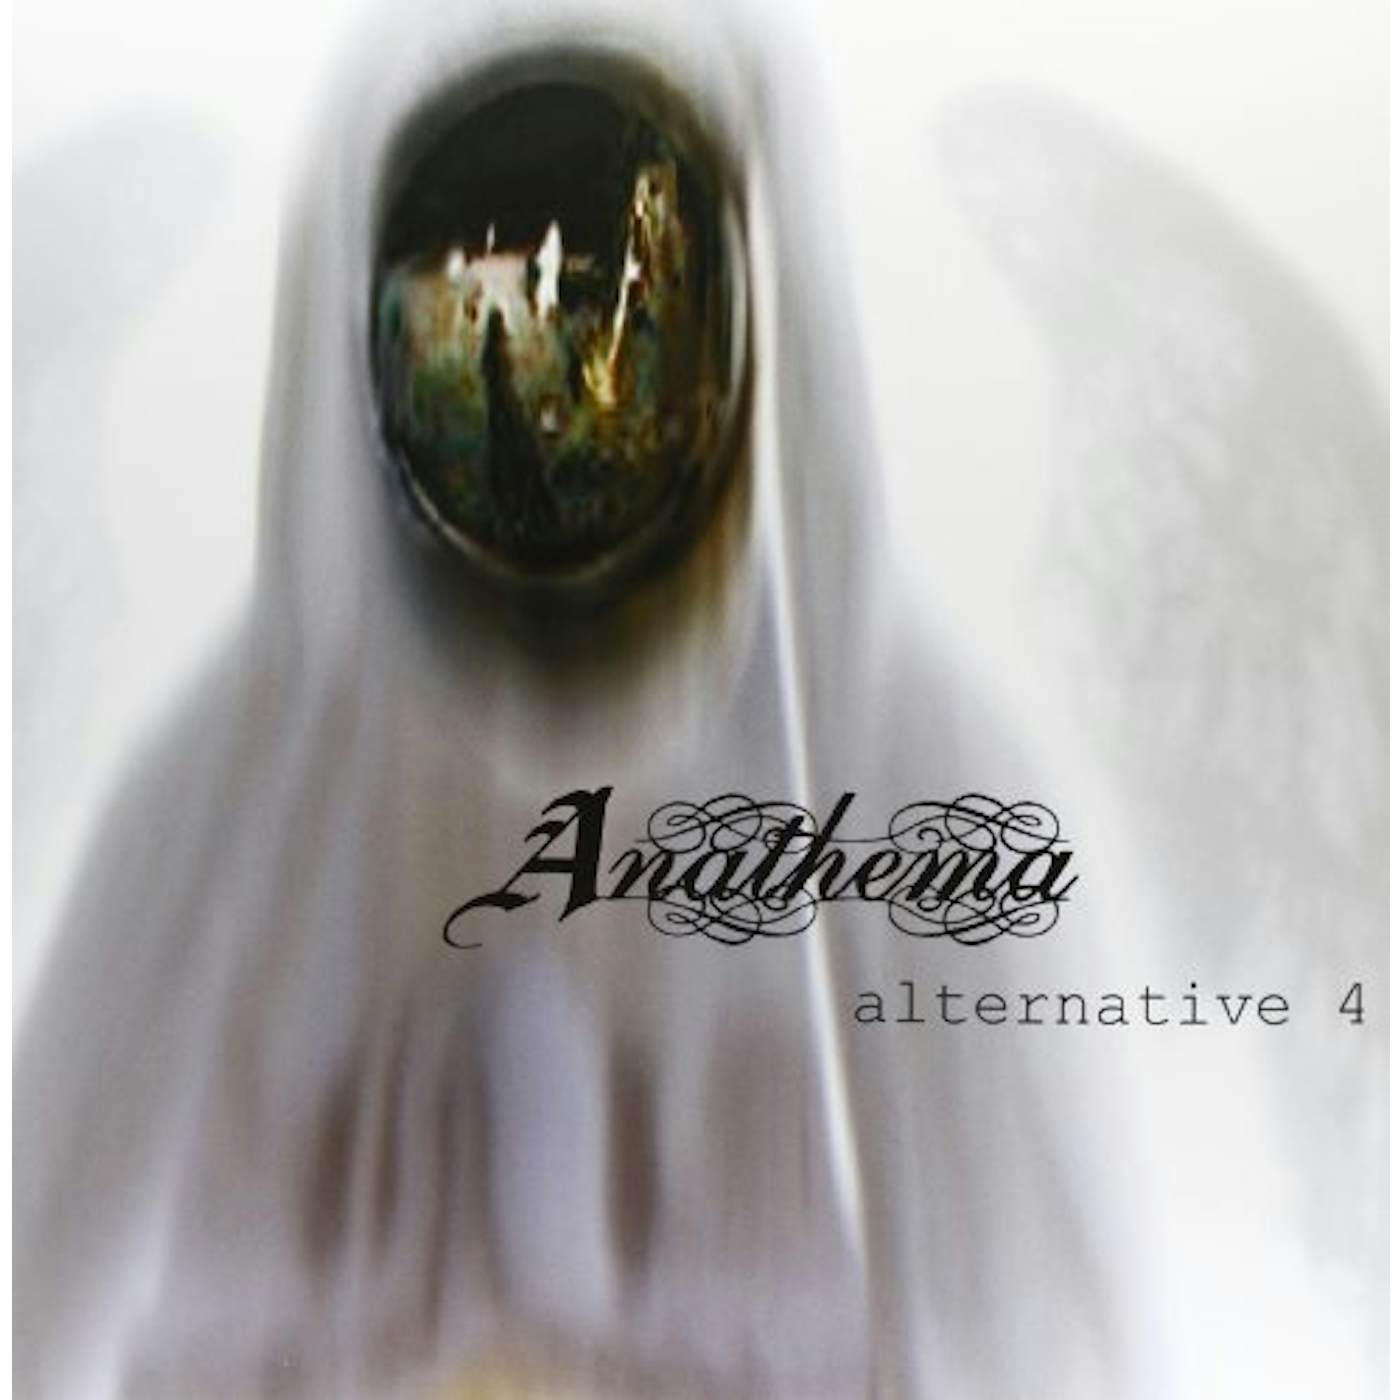 Anathema Alternative 4 Vinyl Record